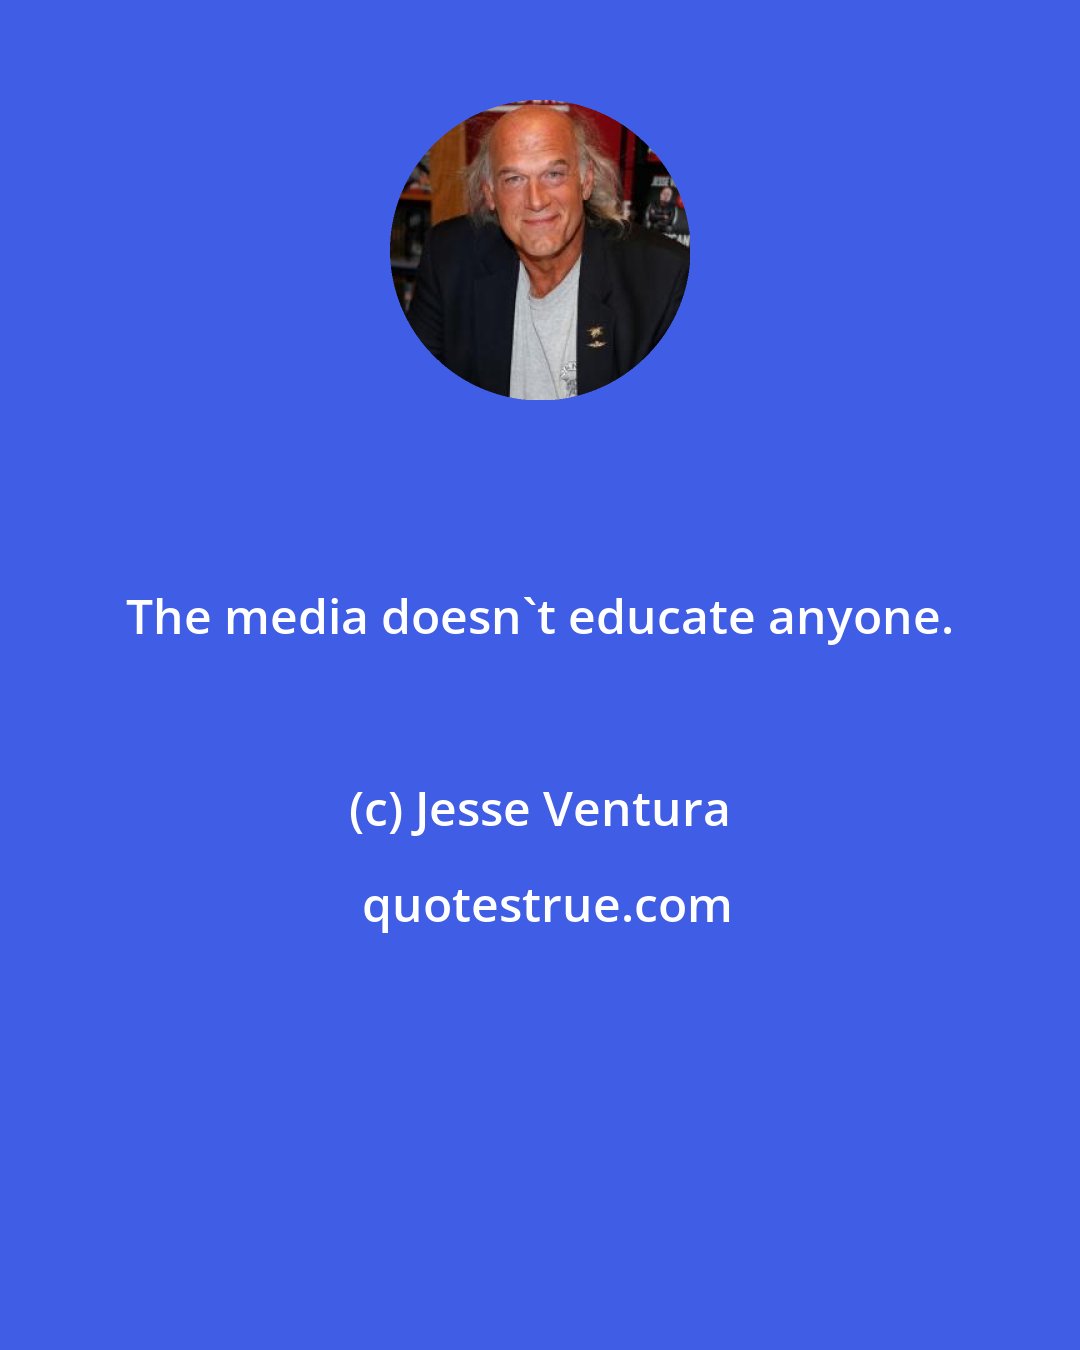 Jesse Ventura: The media doesn't educate anyone.